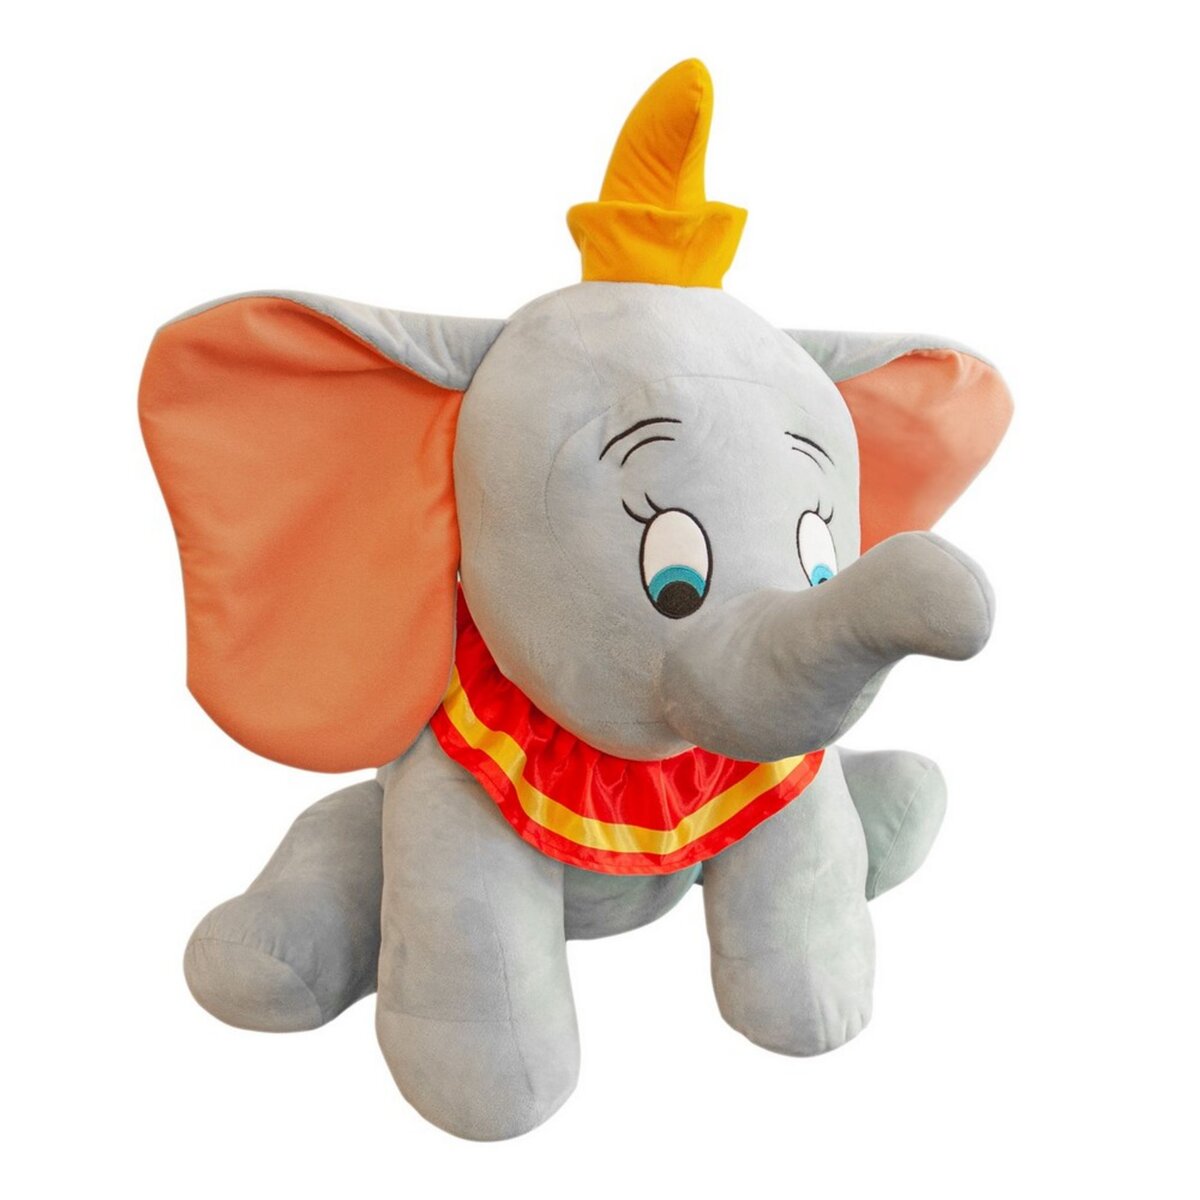  XXL Peluche Dumbo l'elephant 60 cm geante